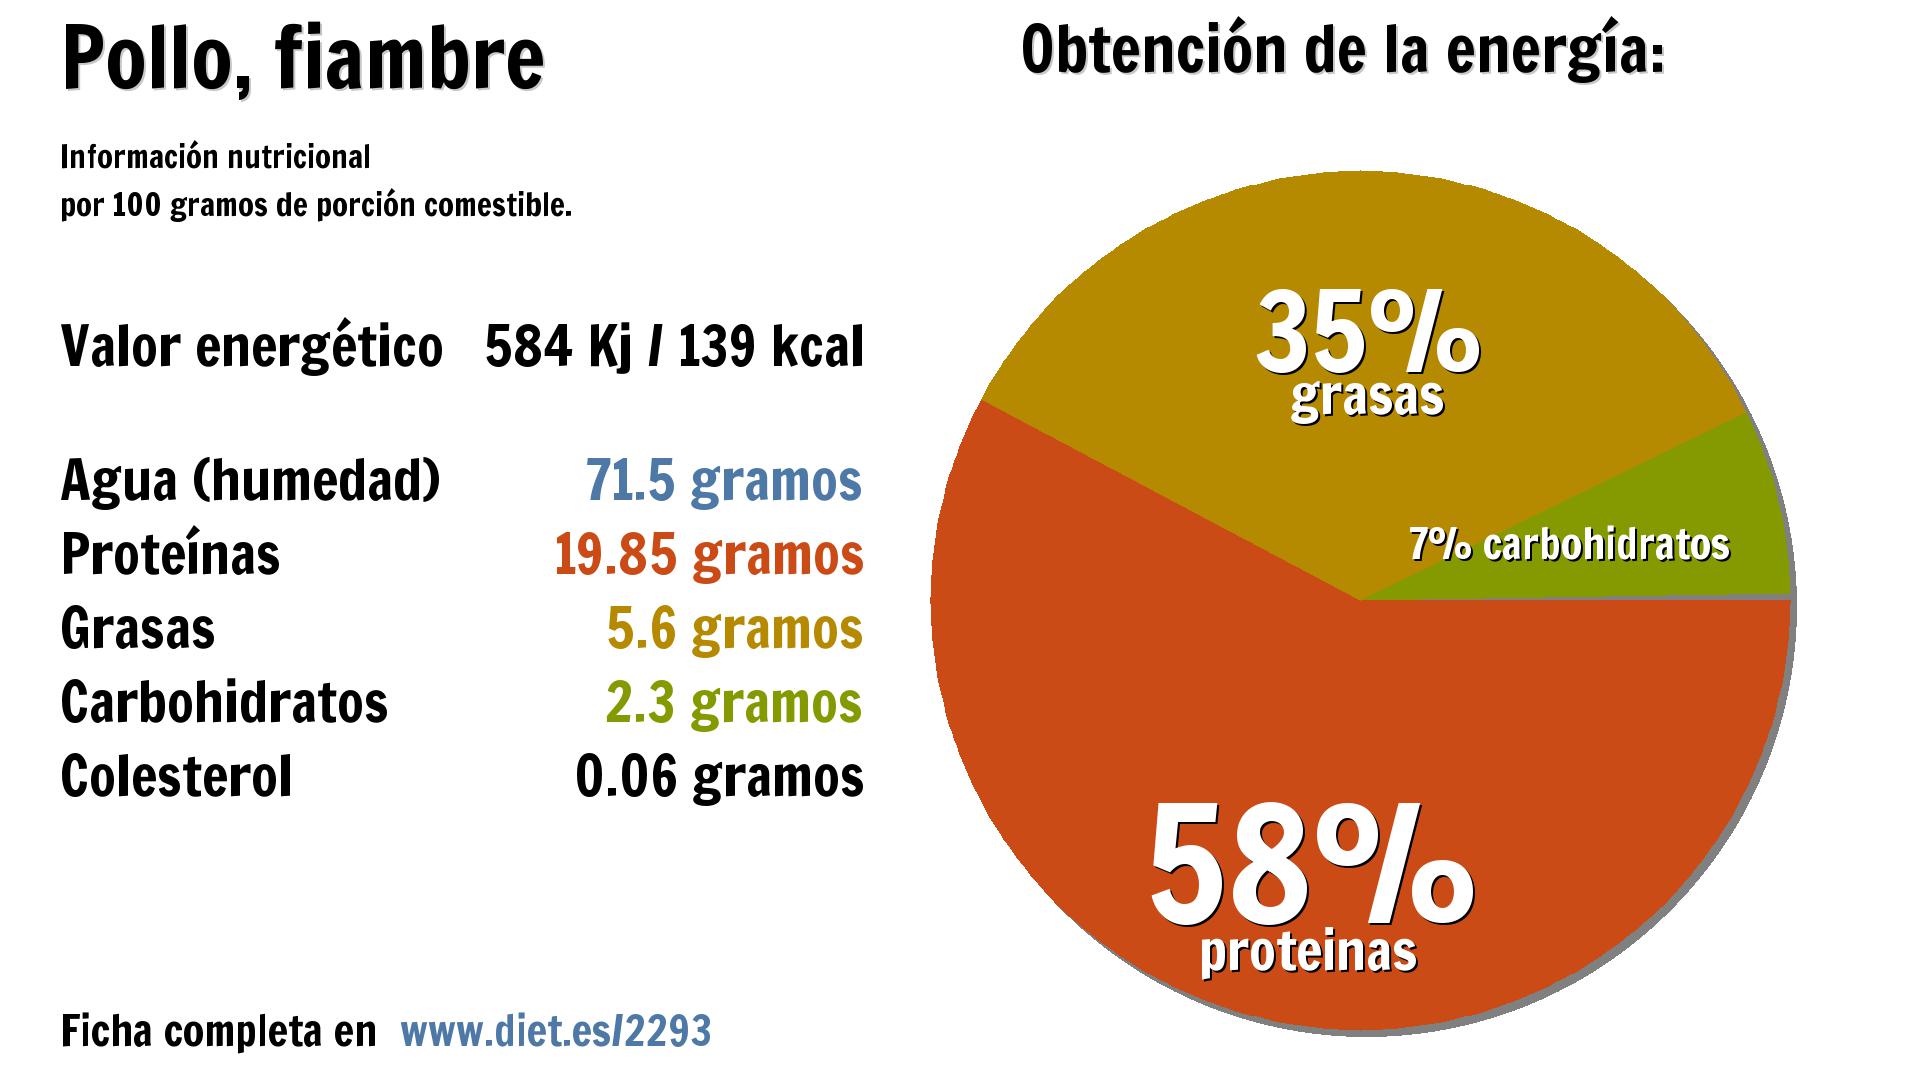 Pollo, fiambre: energía 584 Kj, agua 72 g., proteínas 20 g., grasas 6 g. y carbohidratos 2 g.